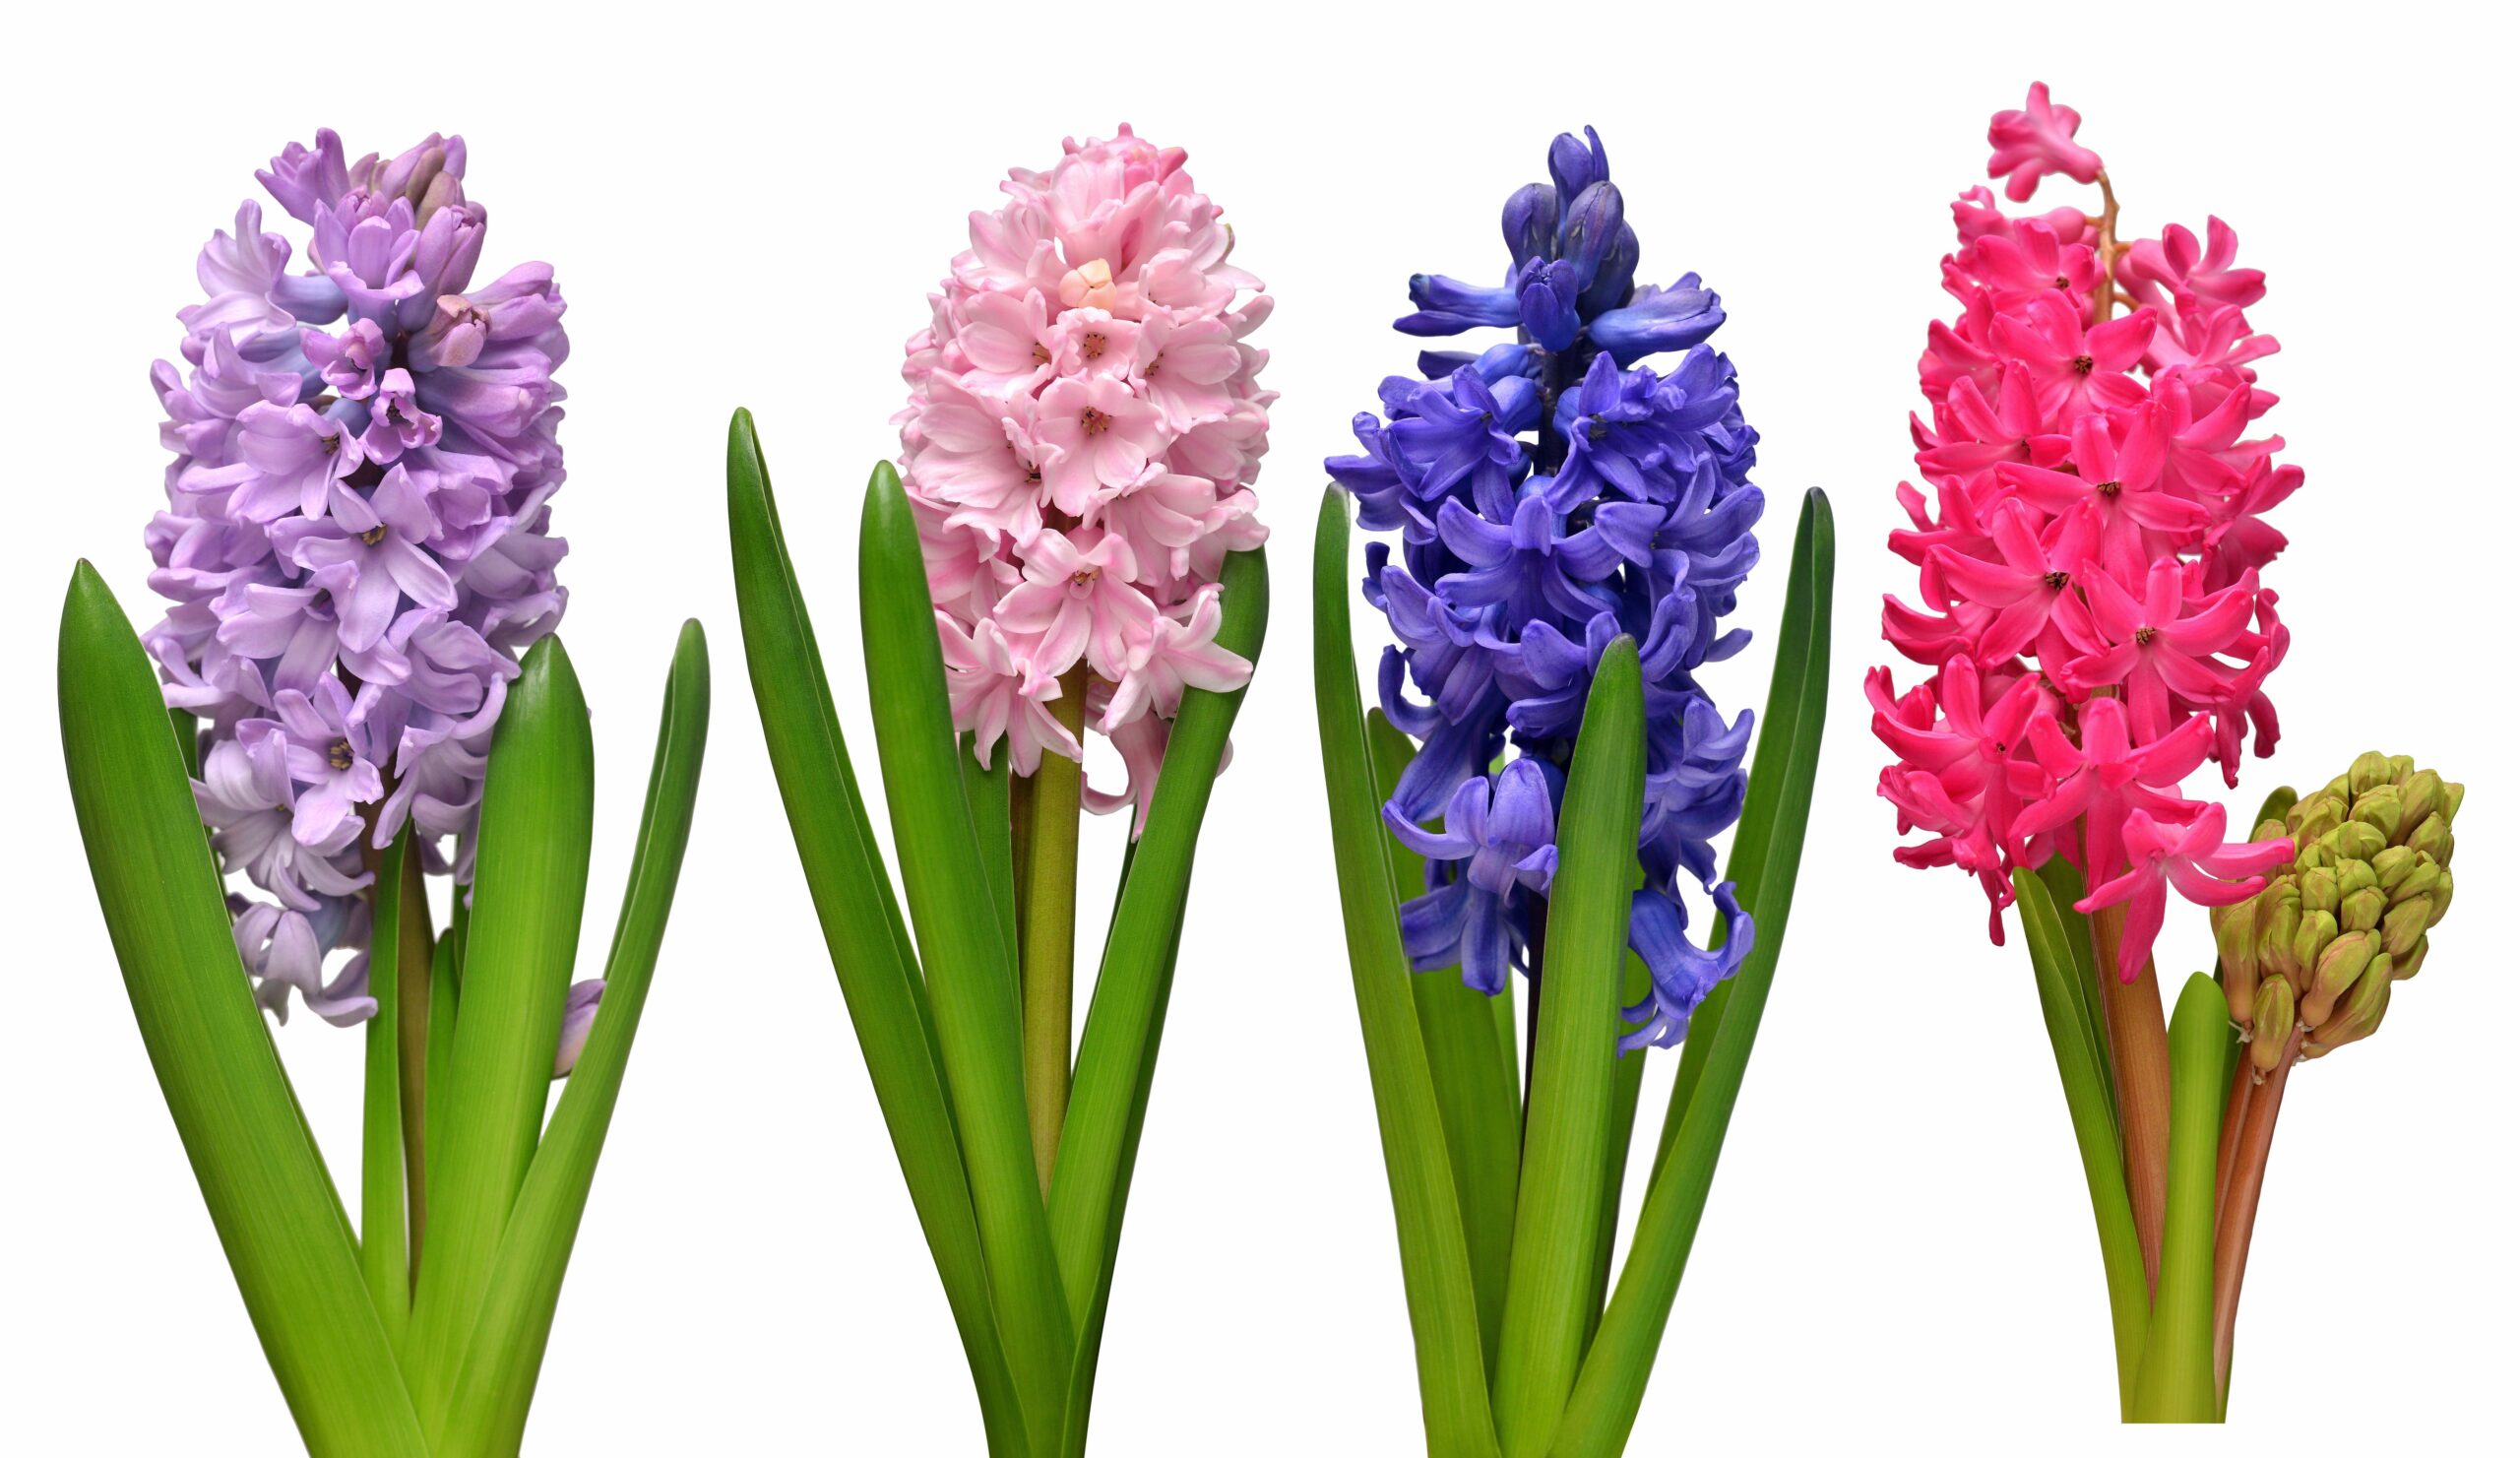 Multicolor hyacinth flowers